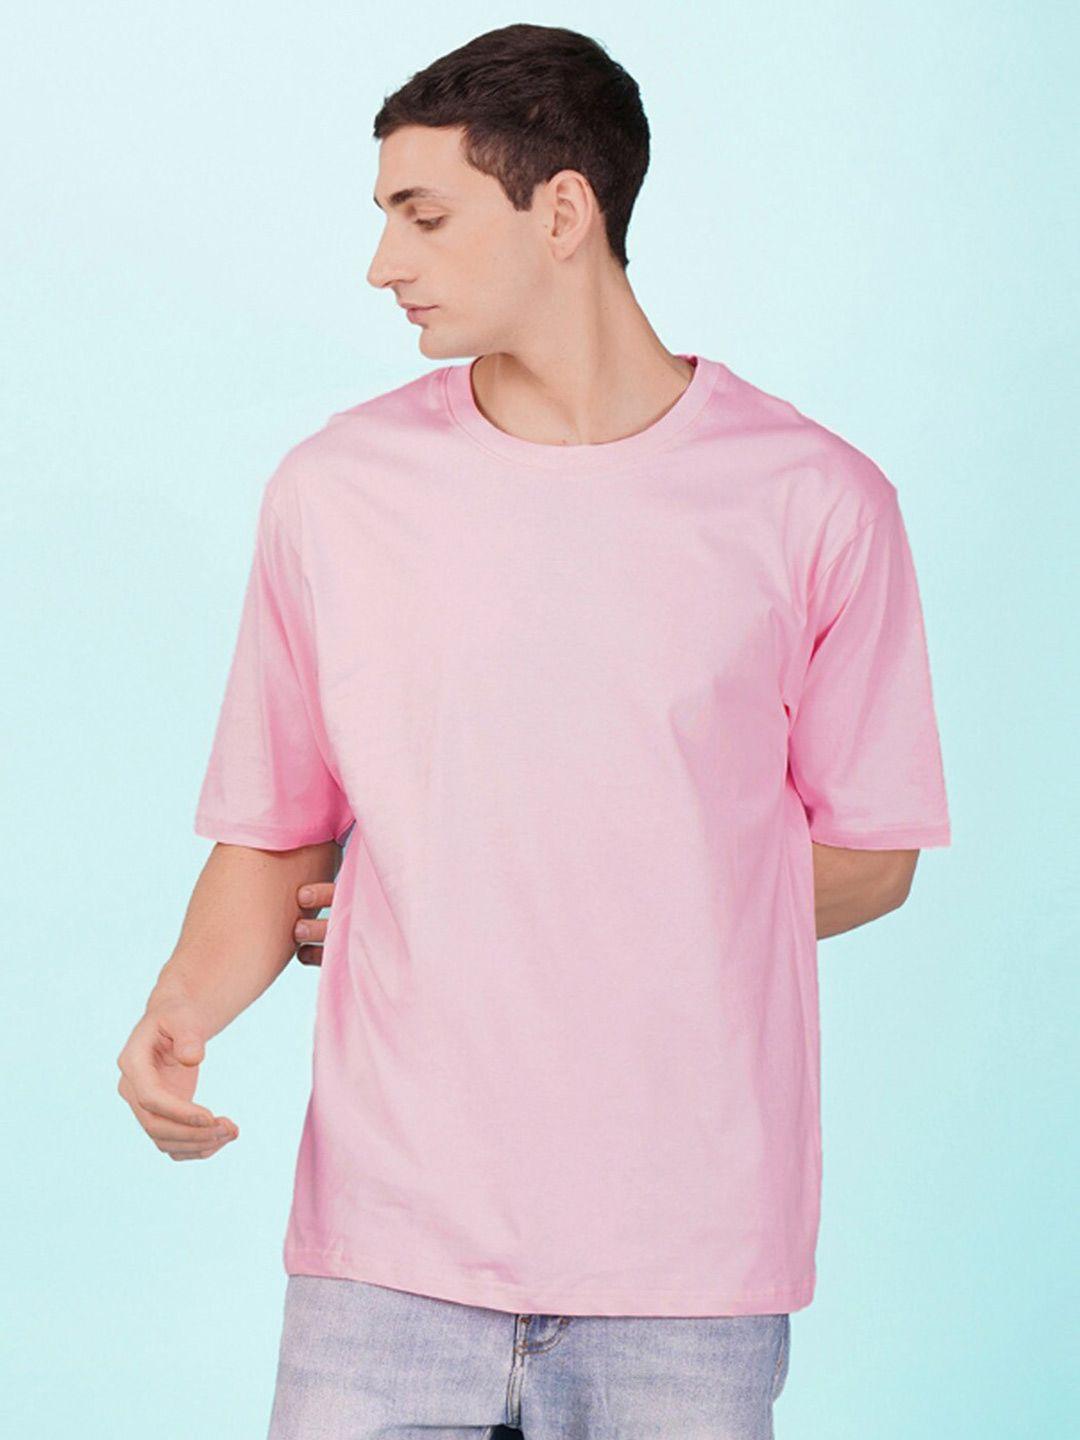 nusyl-round-neck-half-sleeve-oversized-cotton-t-shirt